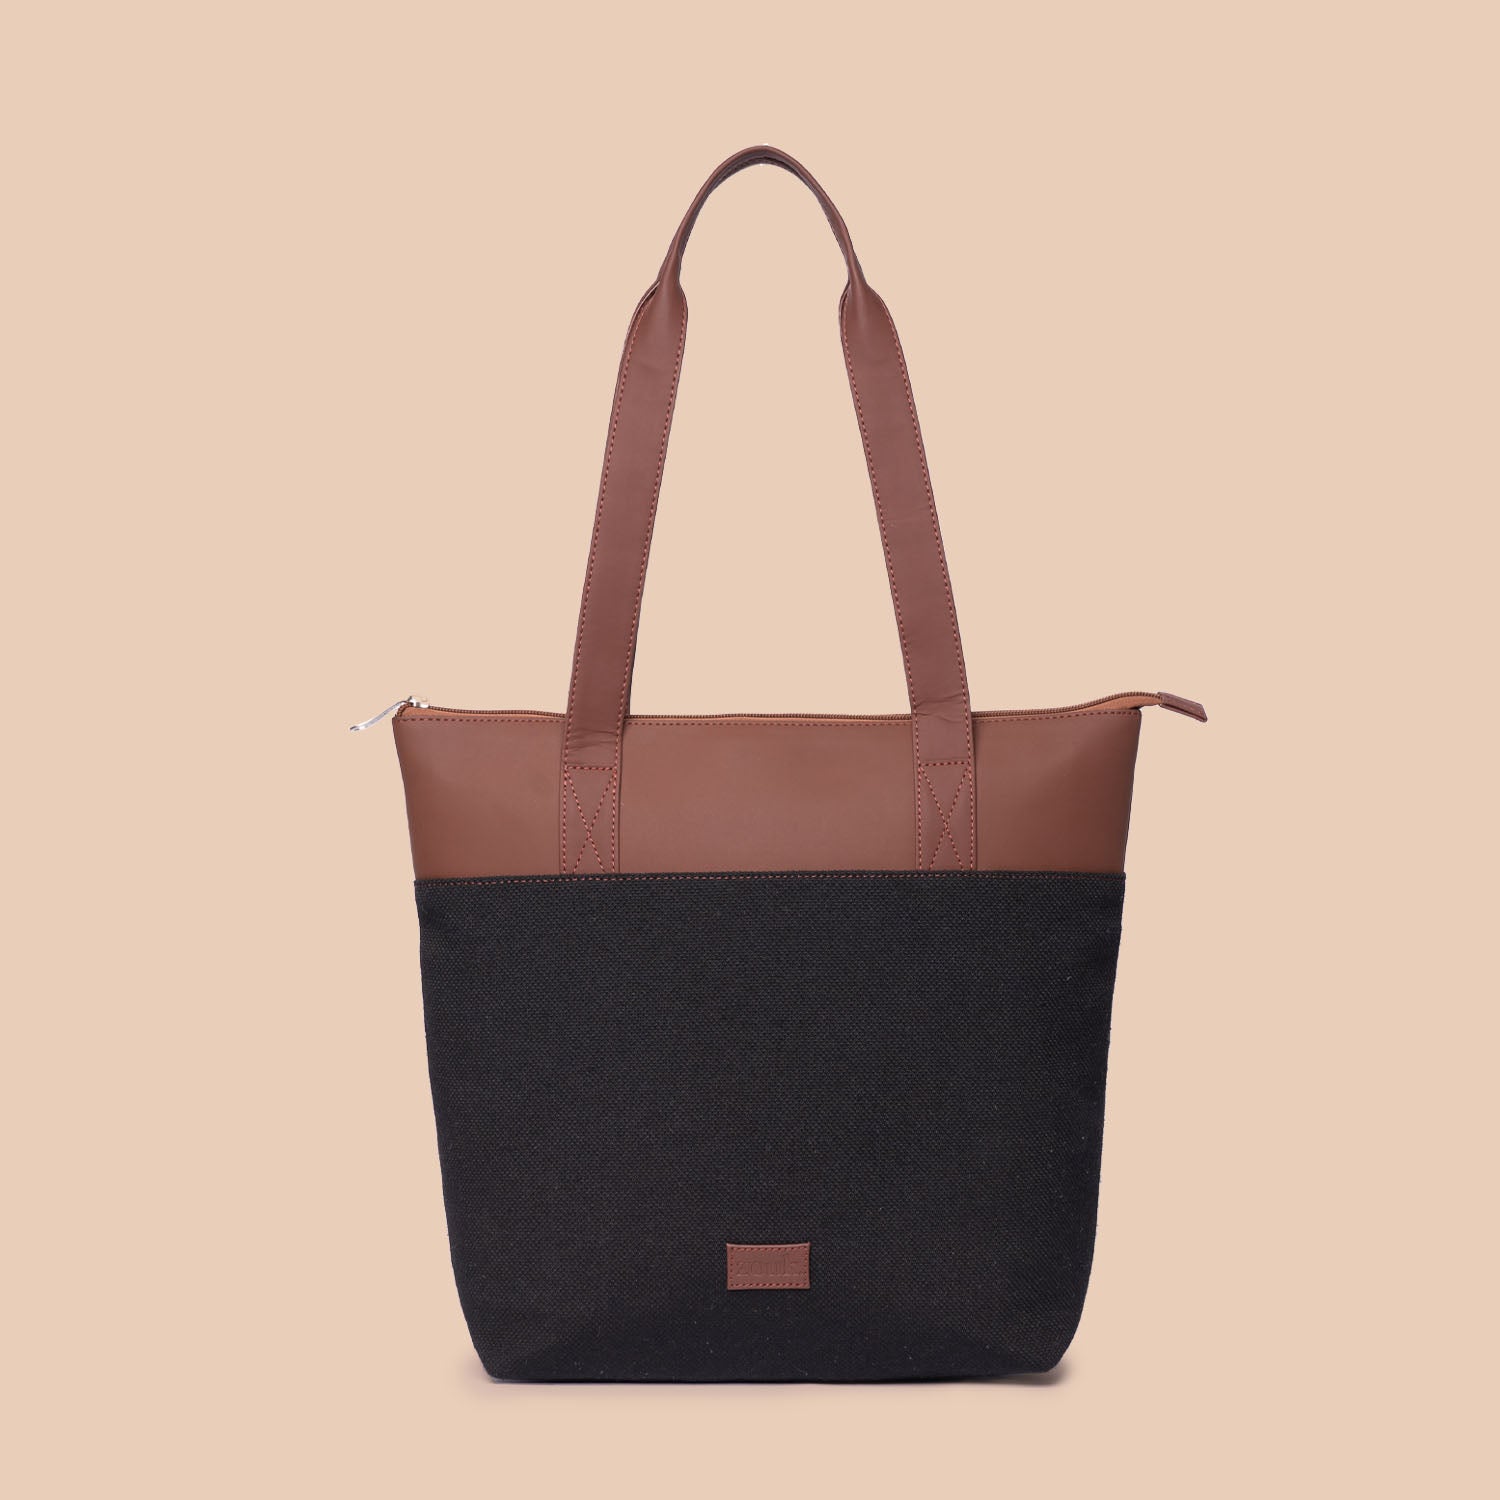 Lattice Lace & Jet Black - Women's Office Bag & Everyday Tote Bag Combo